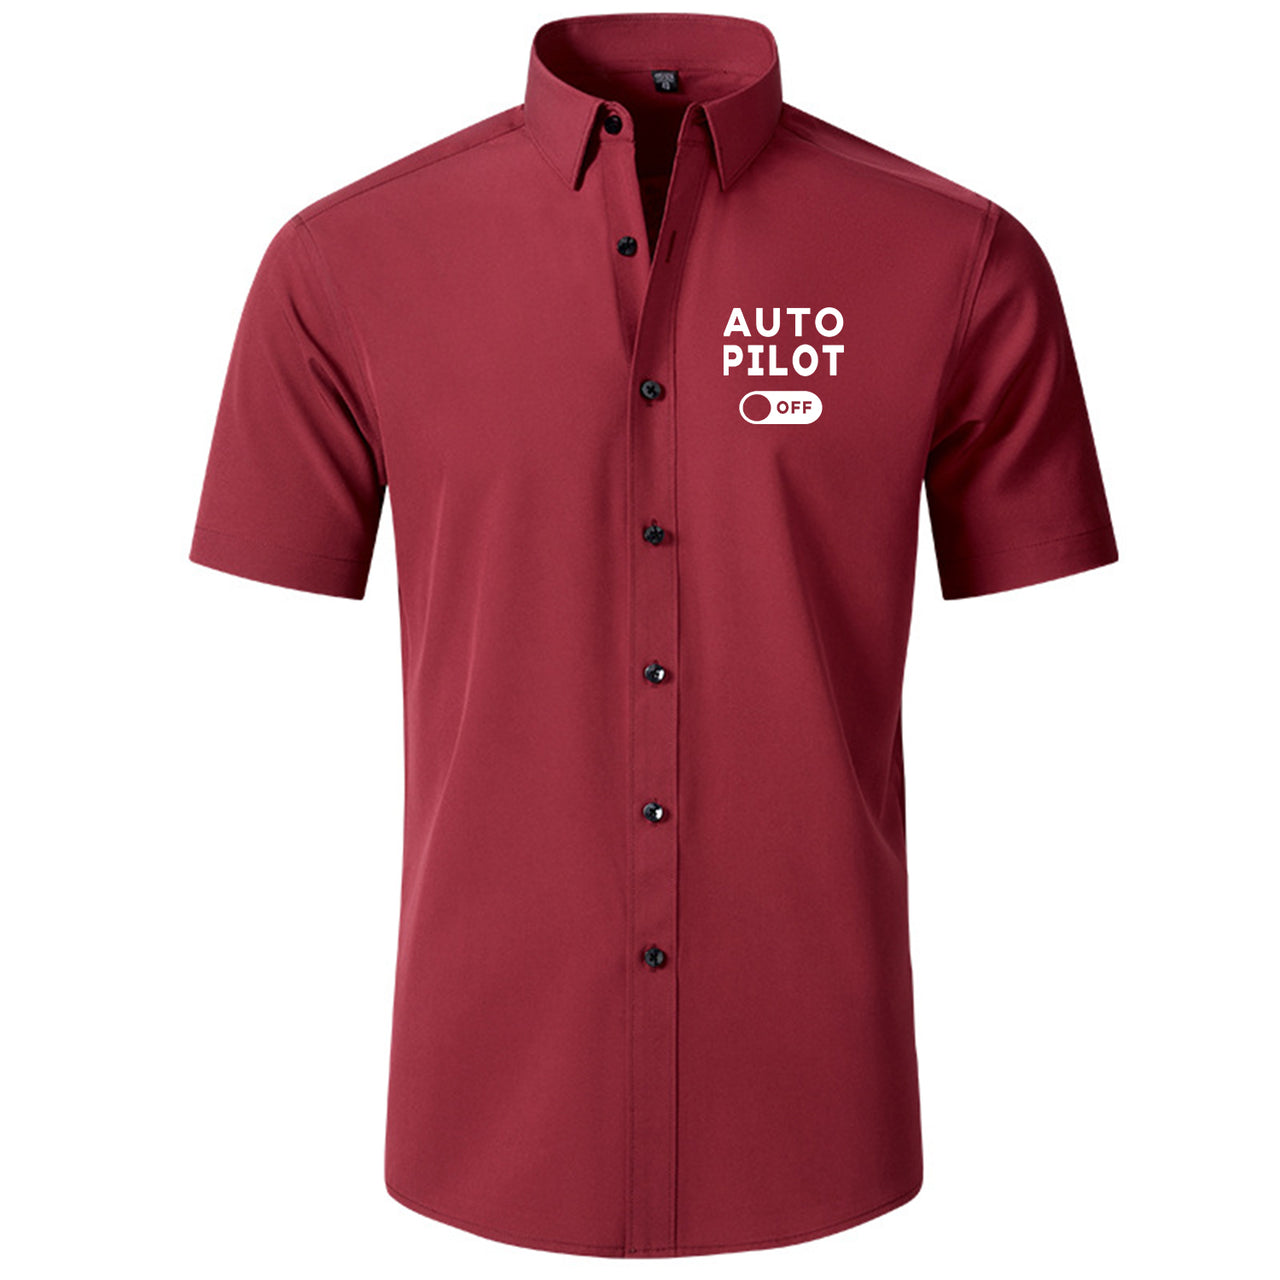 Auto Pilot Off Designed Short Sleeve Shirts